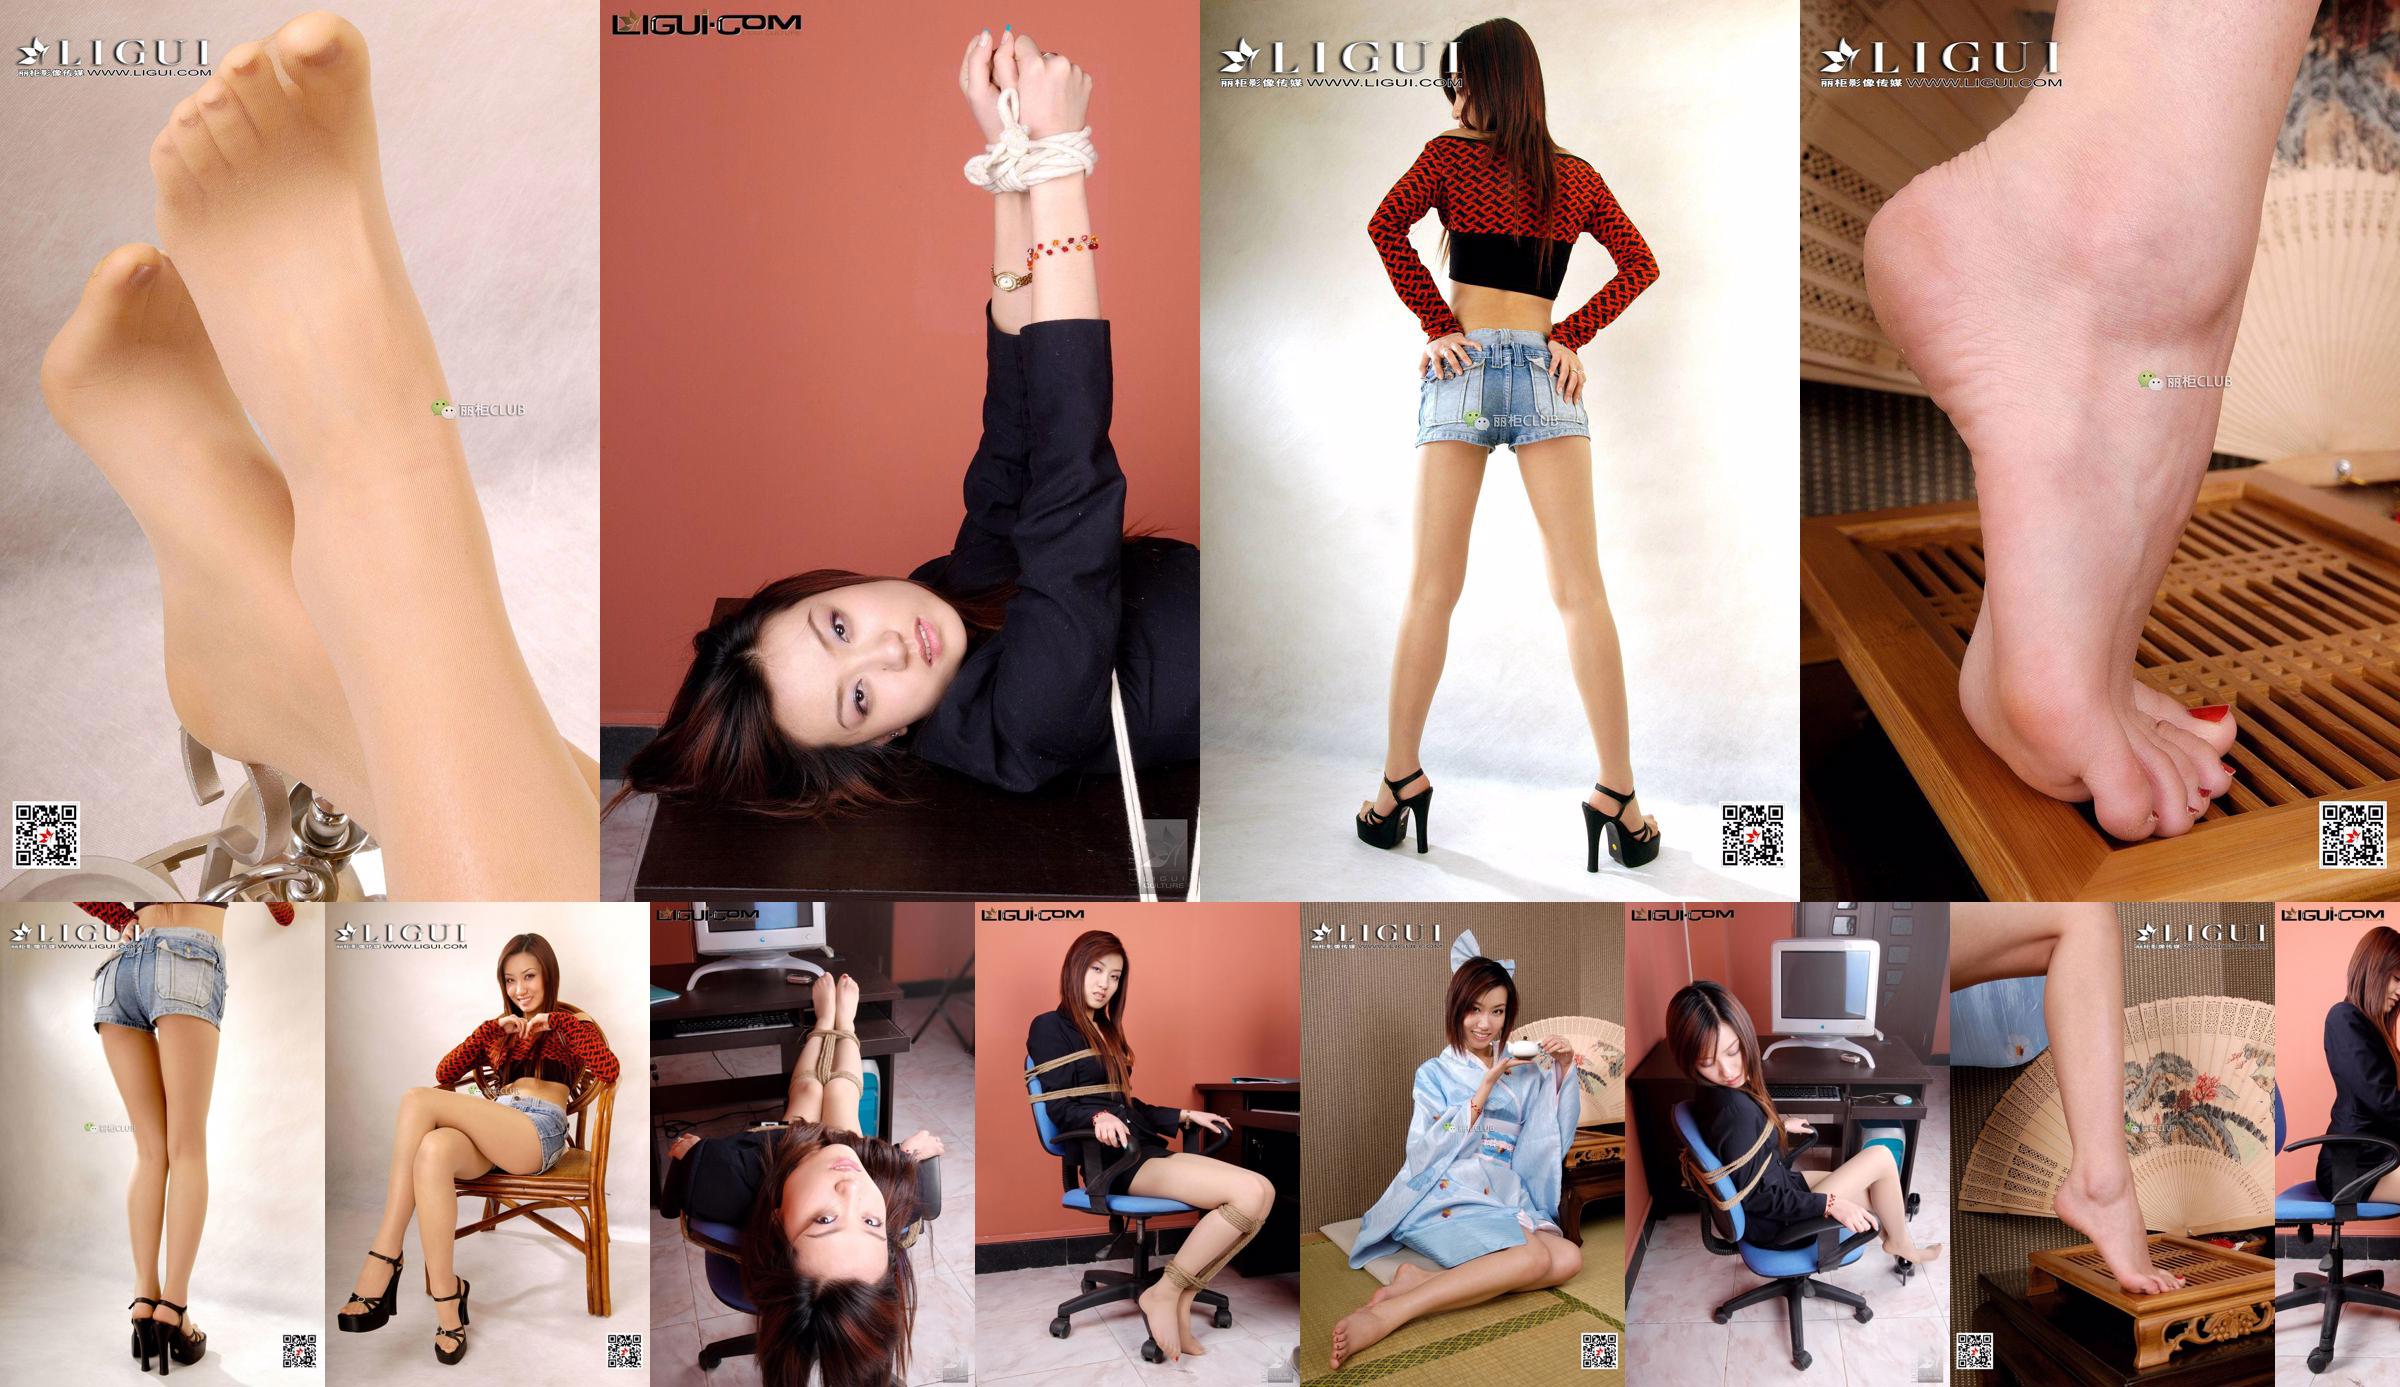 [丽 柜 美 ​​束 LiGui] Model Xiaohui's "Office Bundled" foto van mooie benen en voeten No.caf2f4 Pagina 1